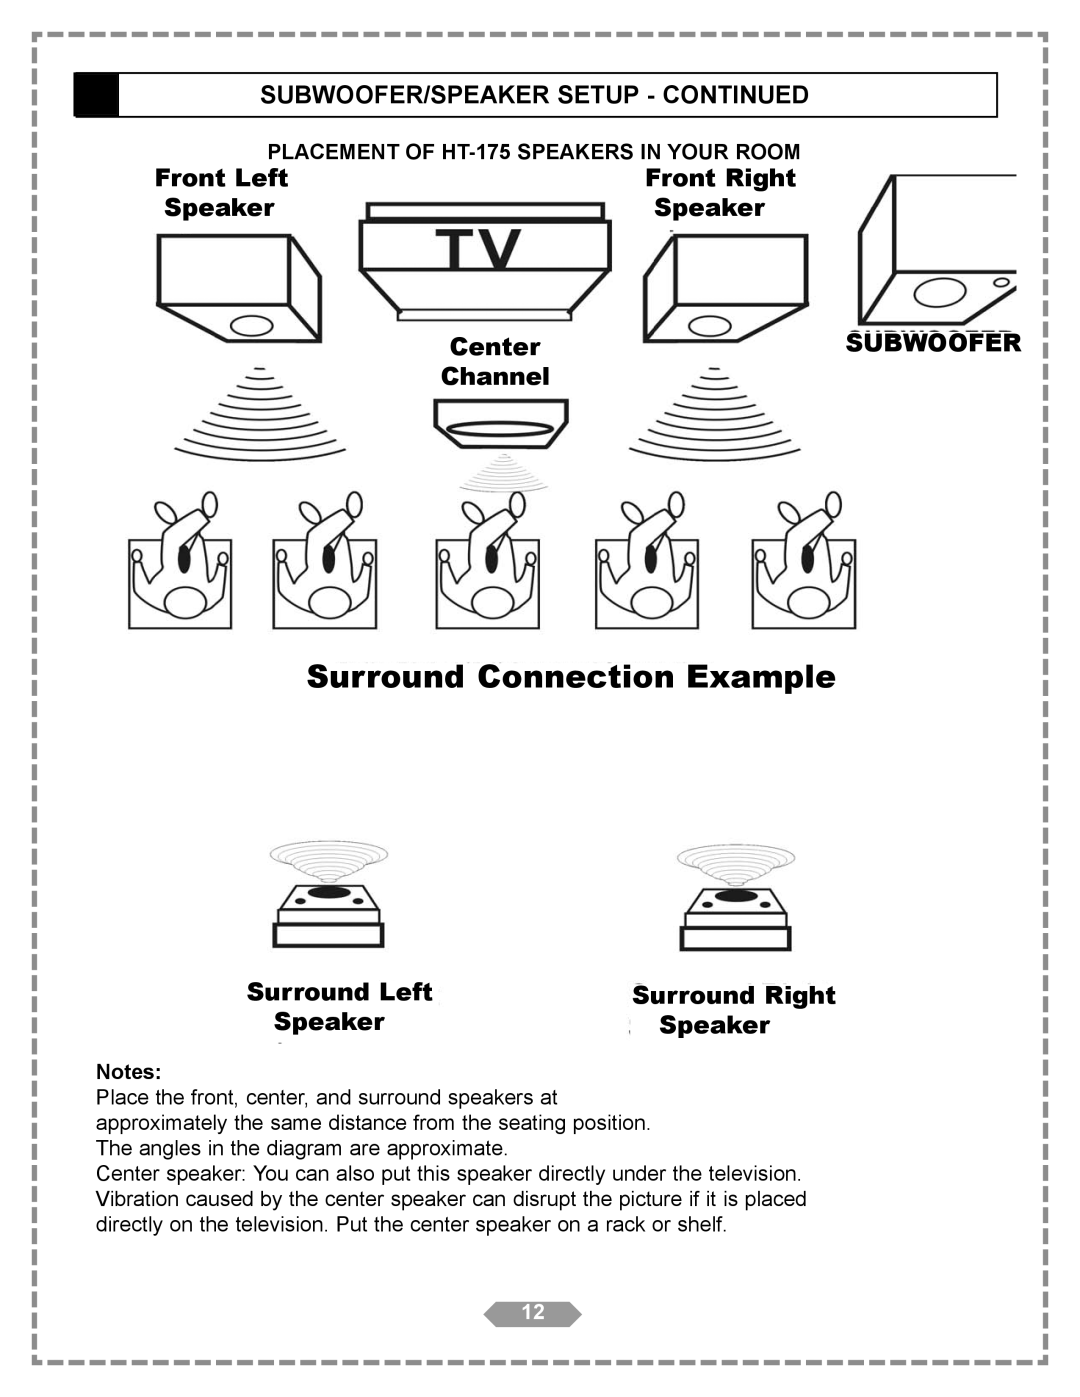 Apex Digital HT-175 Front Left, Front Right, Speaker, Surround Left, Surround Right, Surround Connection Example, Center 